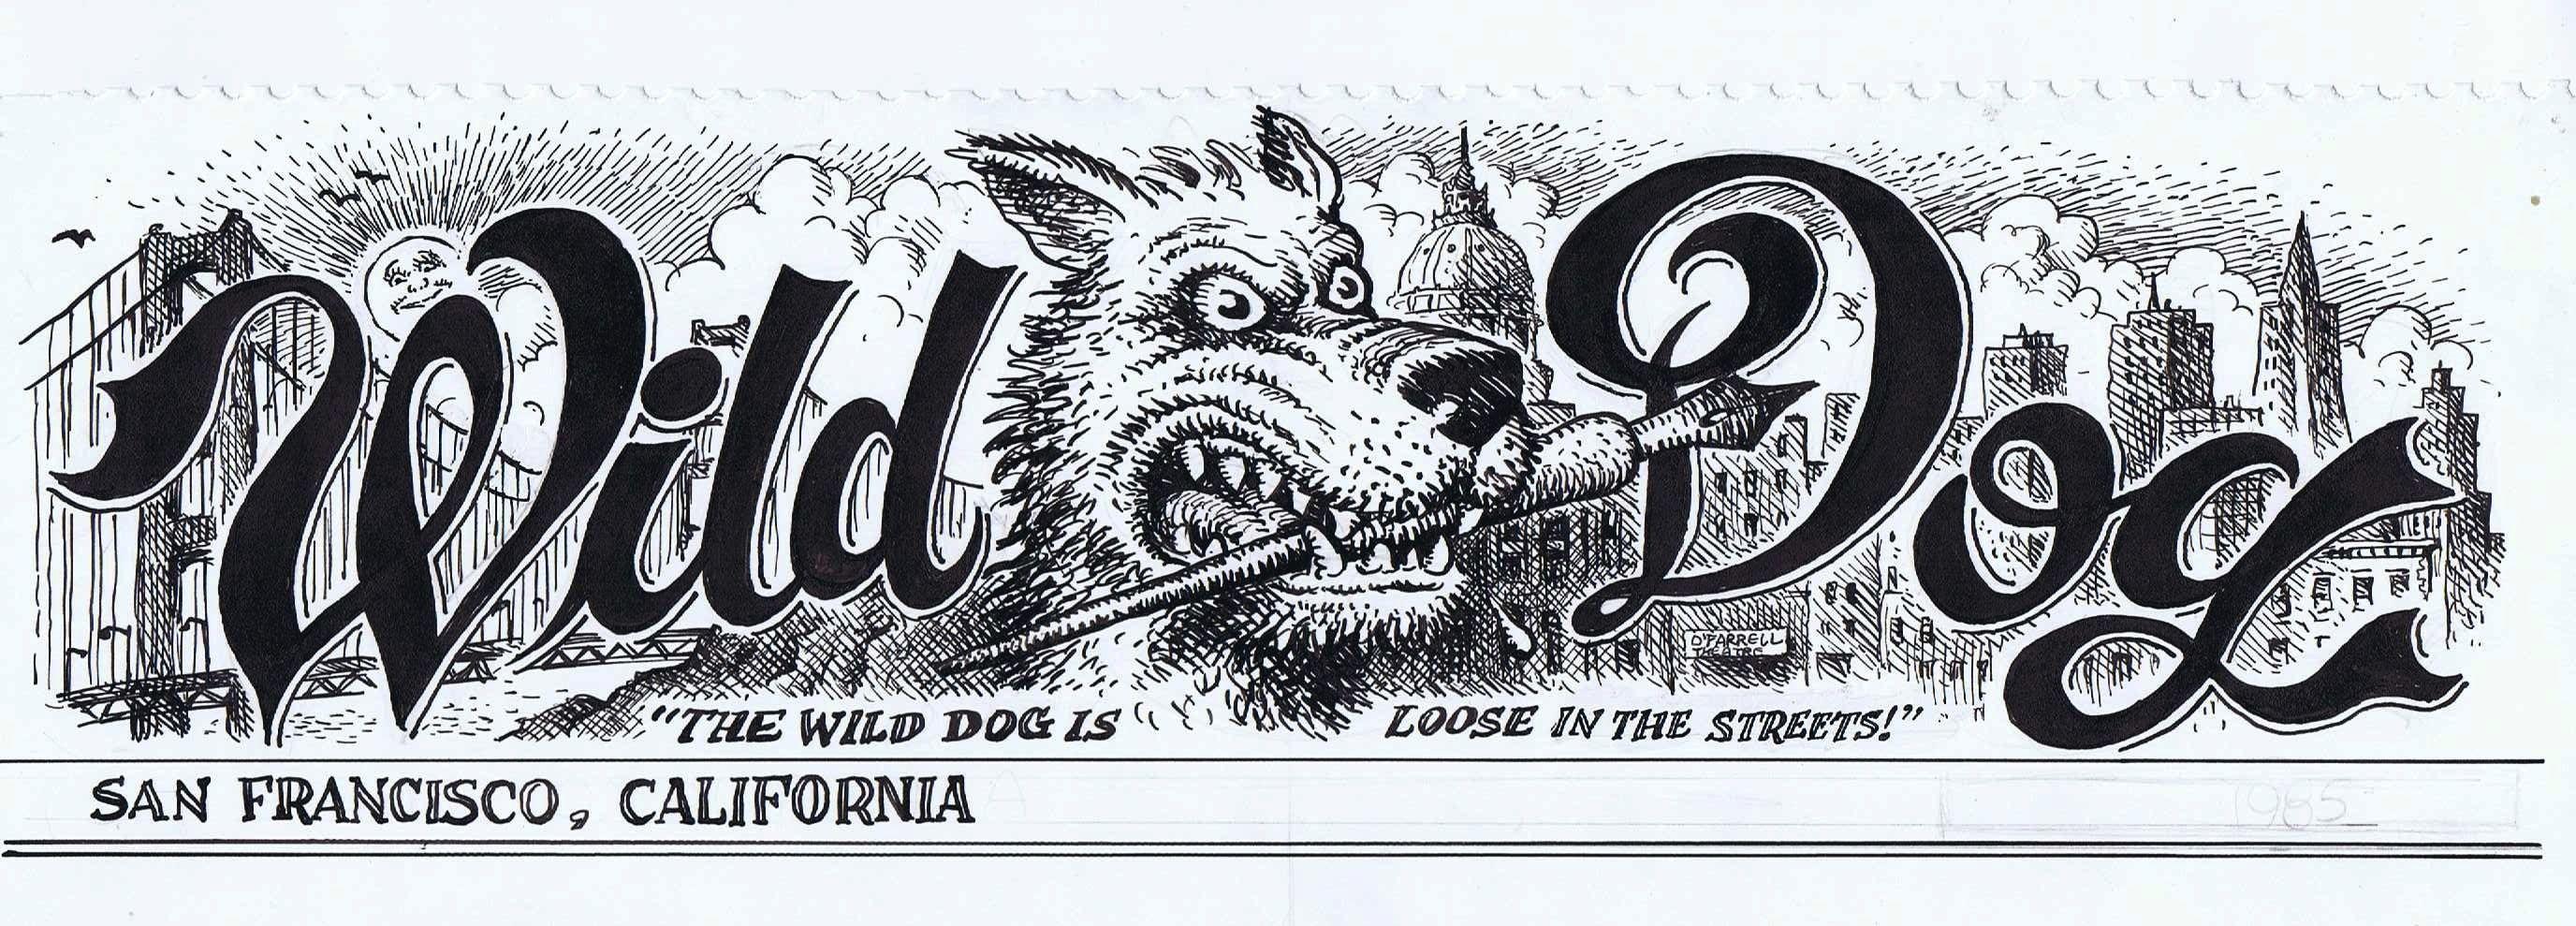 Wild Dog Logo - R Robert Crumb Wild Dog logo 1980s, in Rob Pistella's Sold or Traded